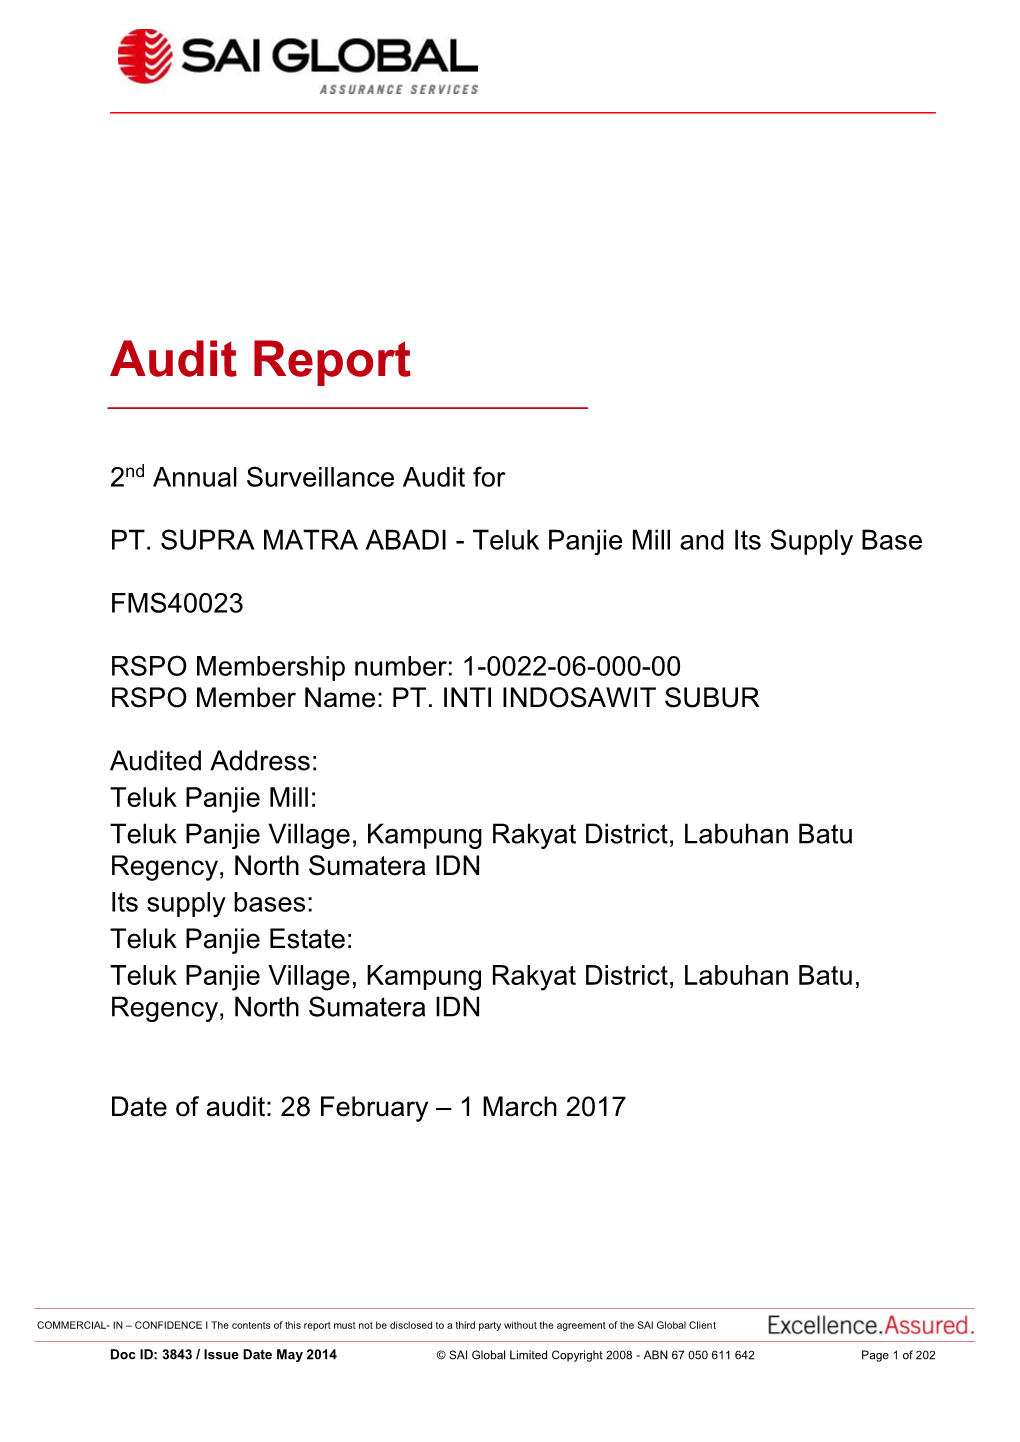 RSPO Audit Report